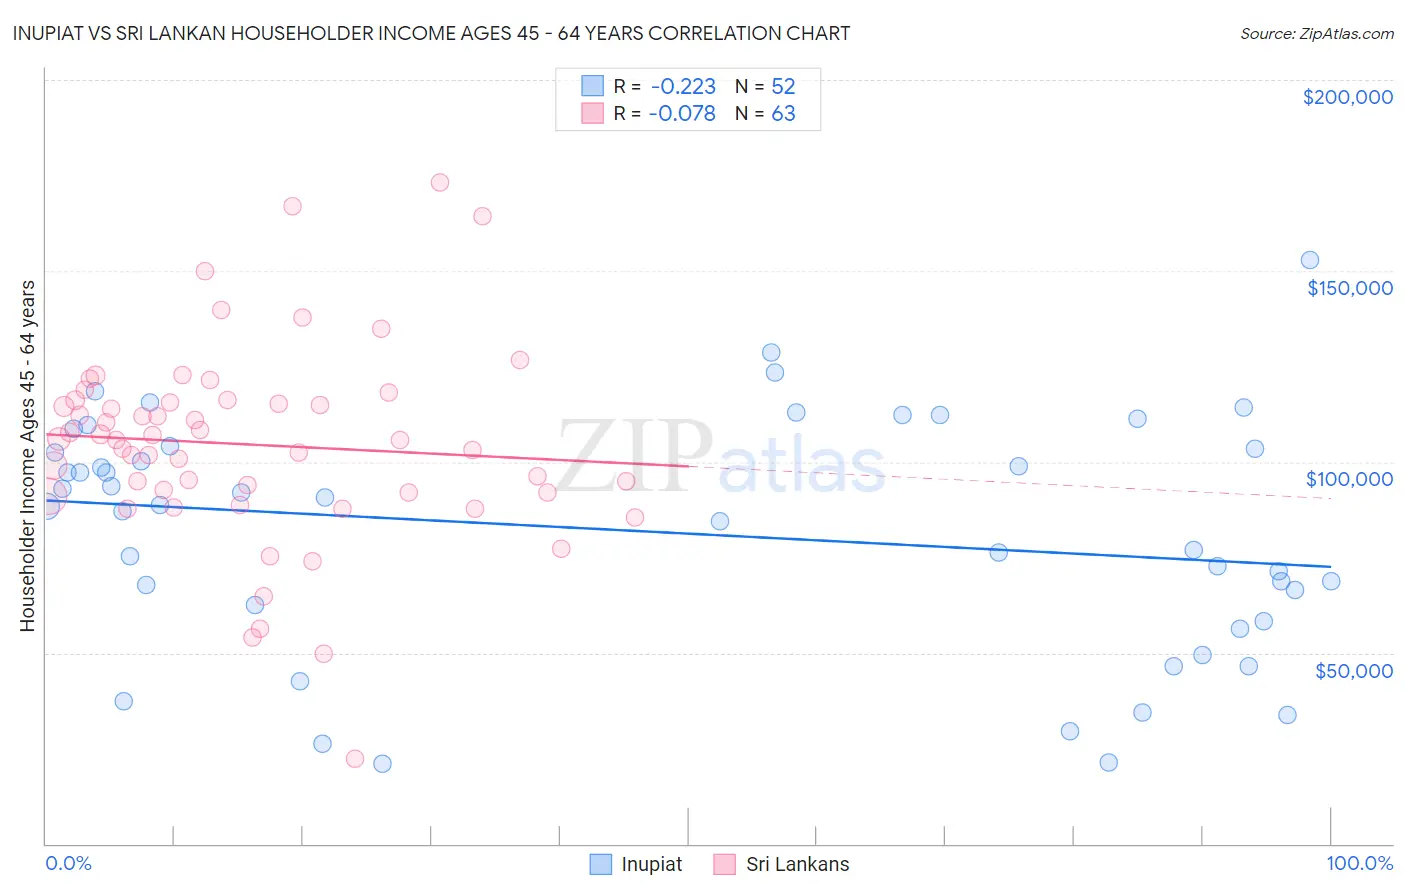 Inupiat vs Sri Lankan Householder Income Ages 45 - 64 years